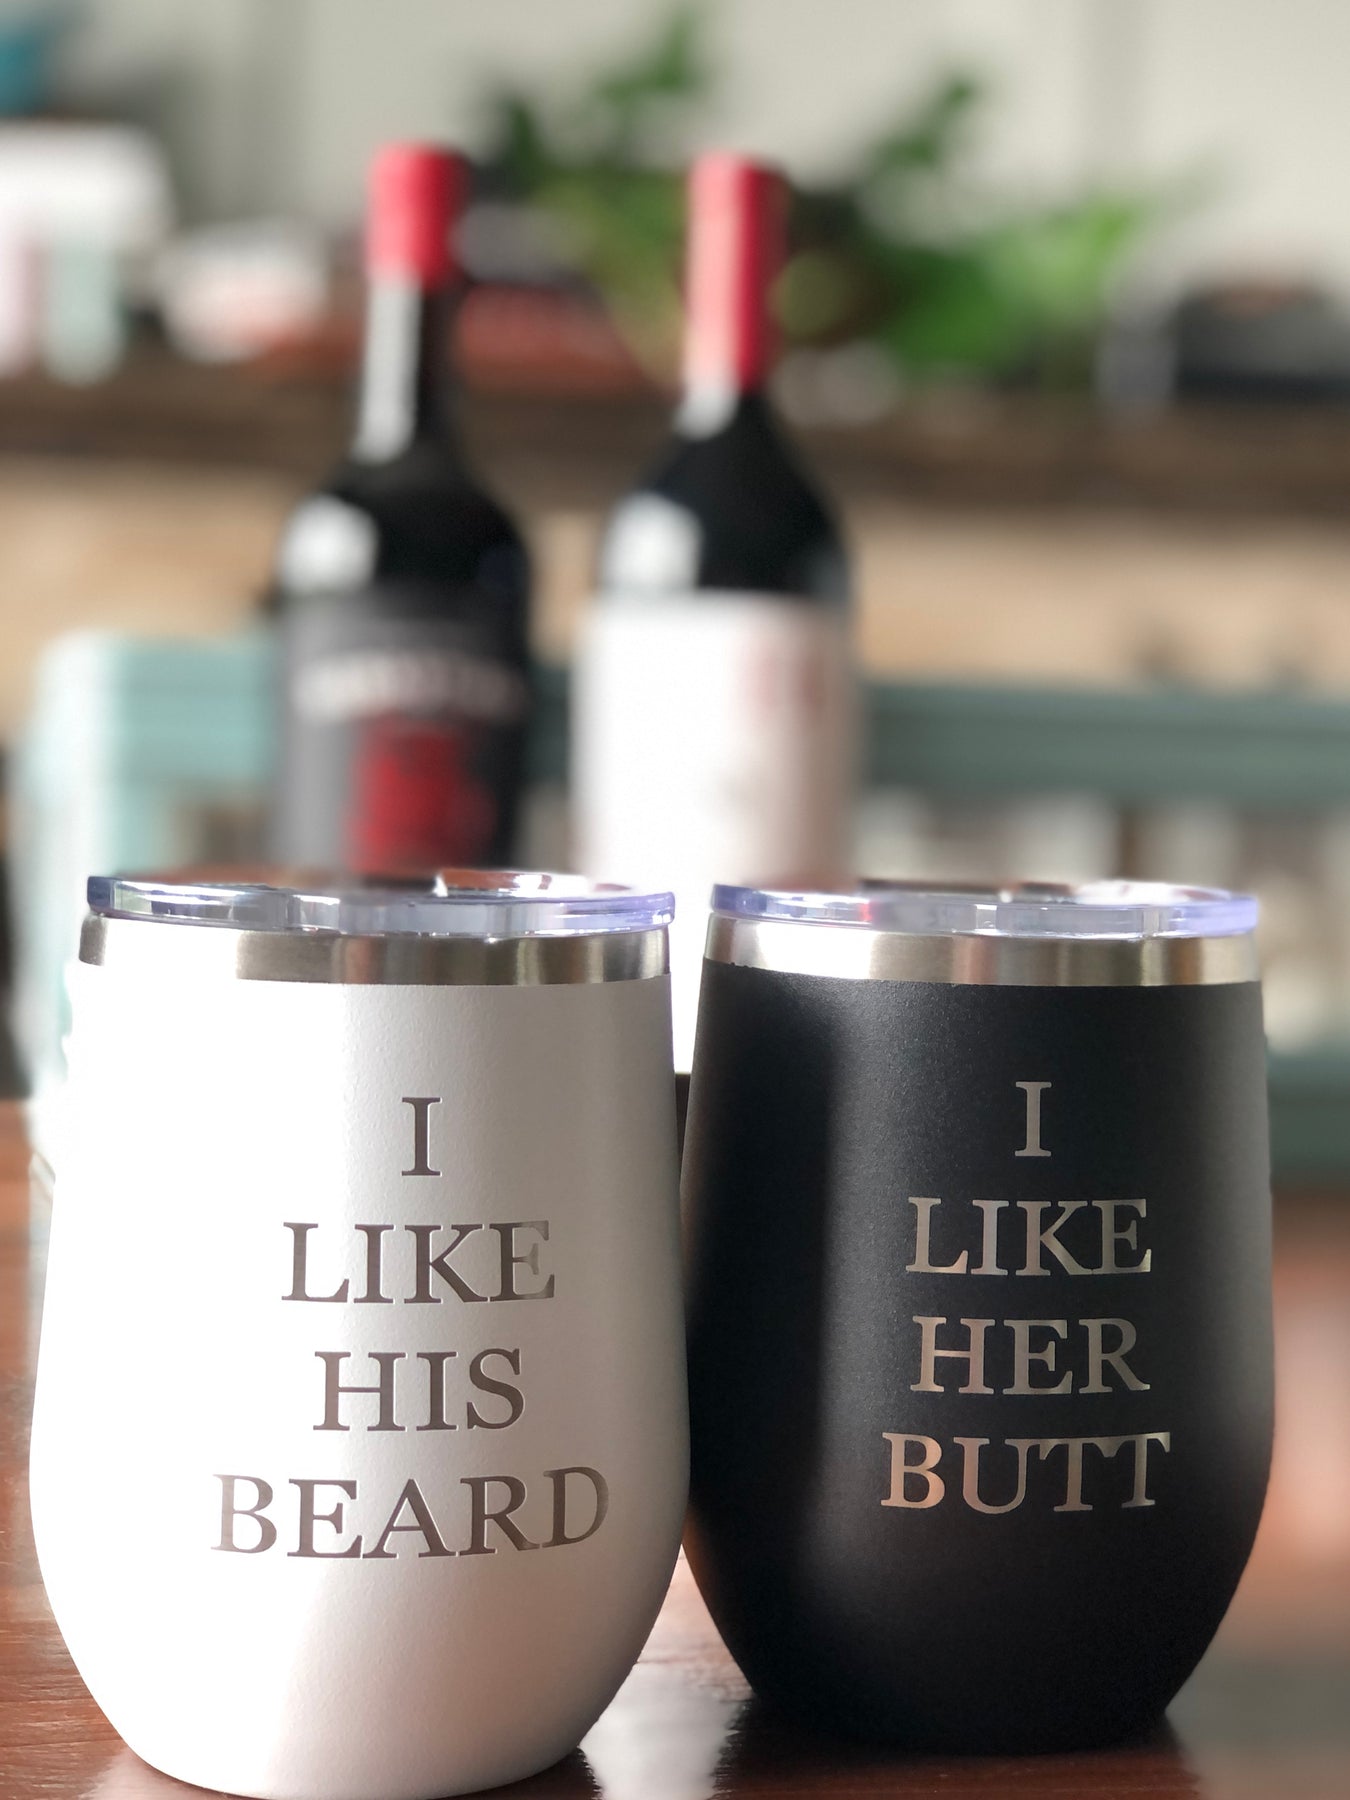 Wedding gift wine tumbler set. I like his beard, I like her butt.